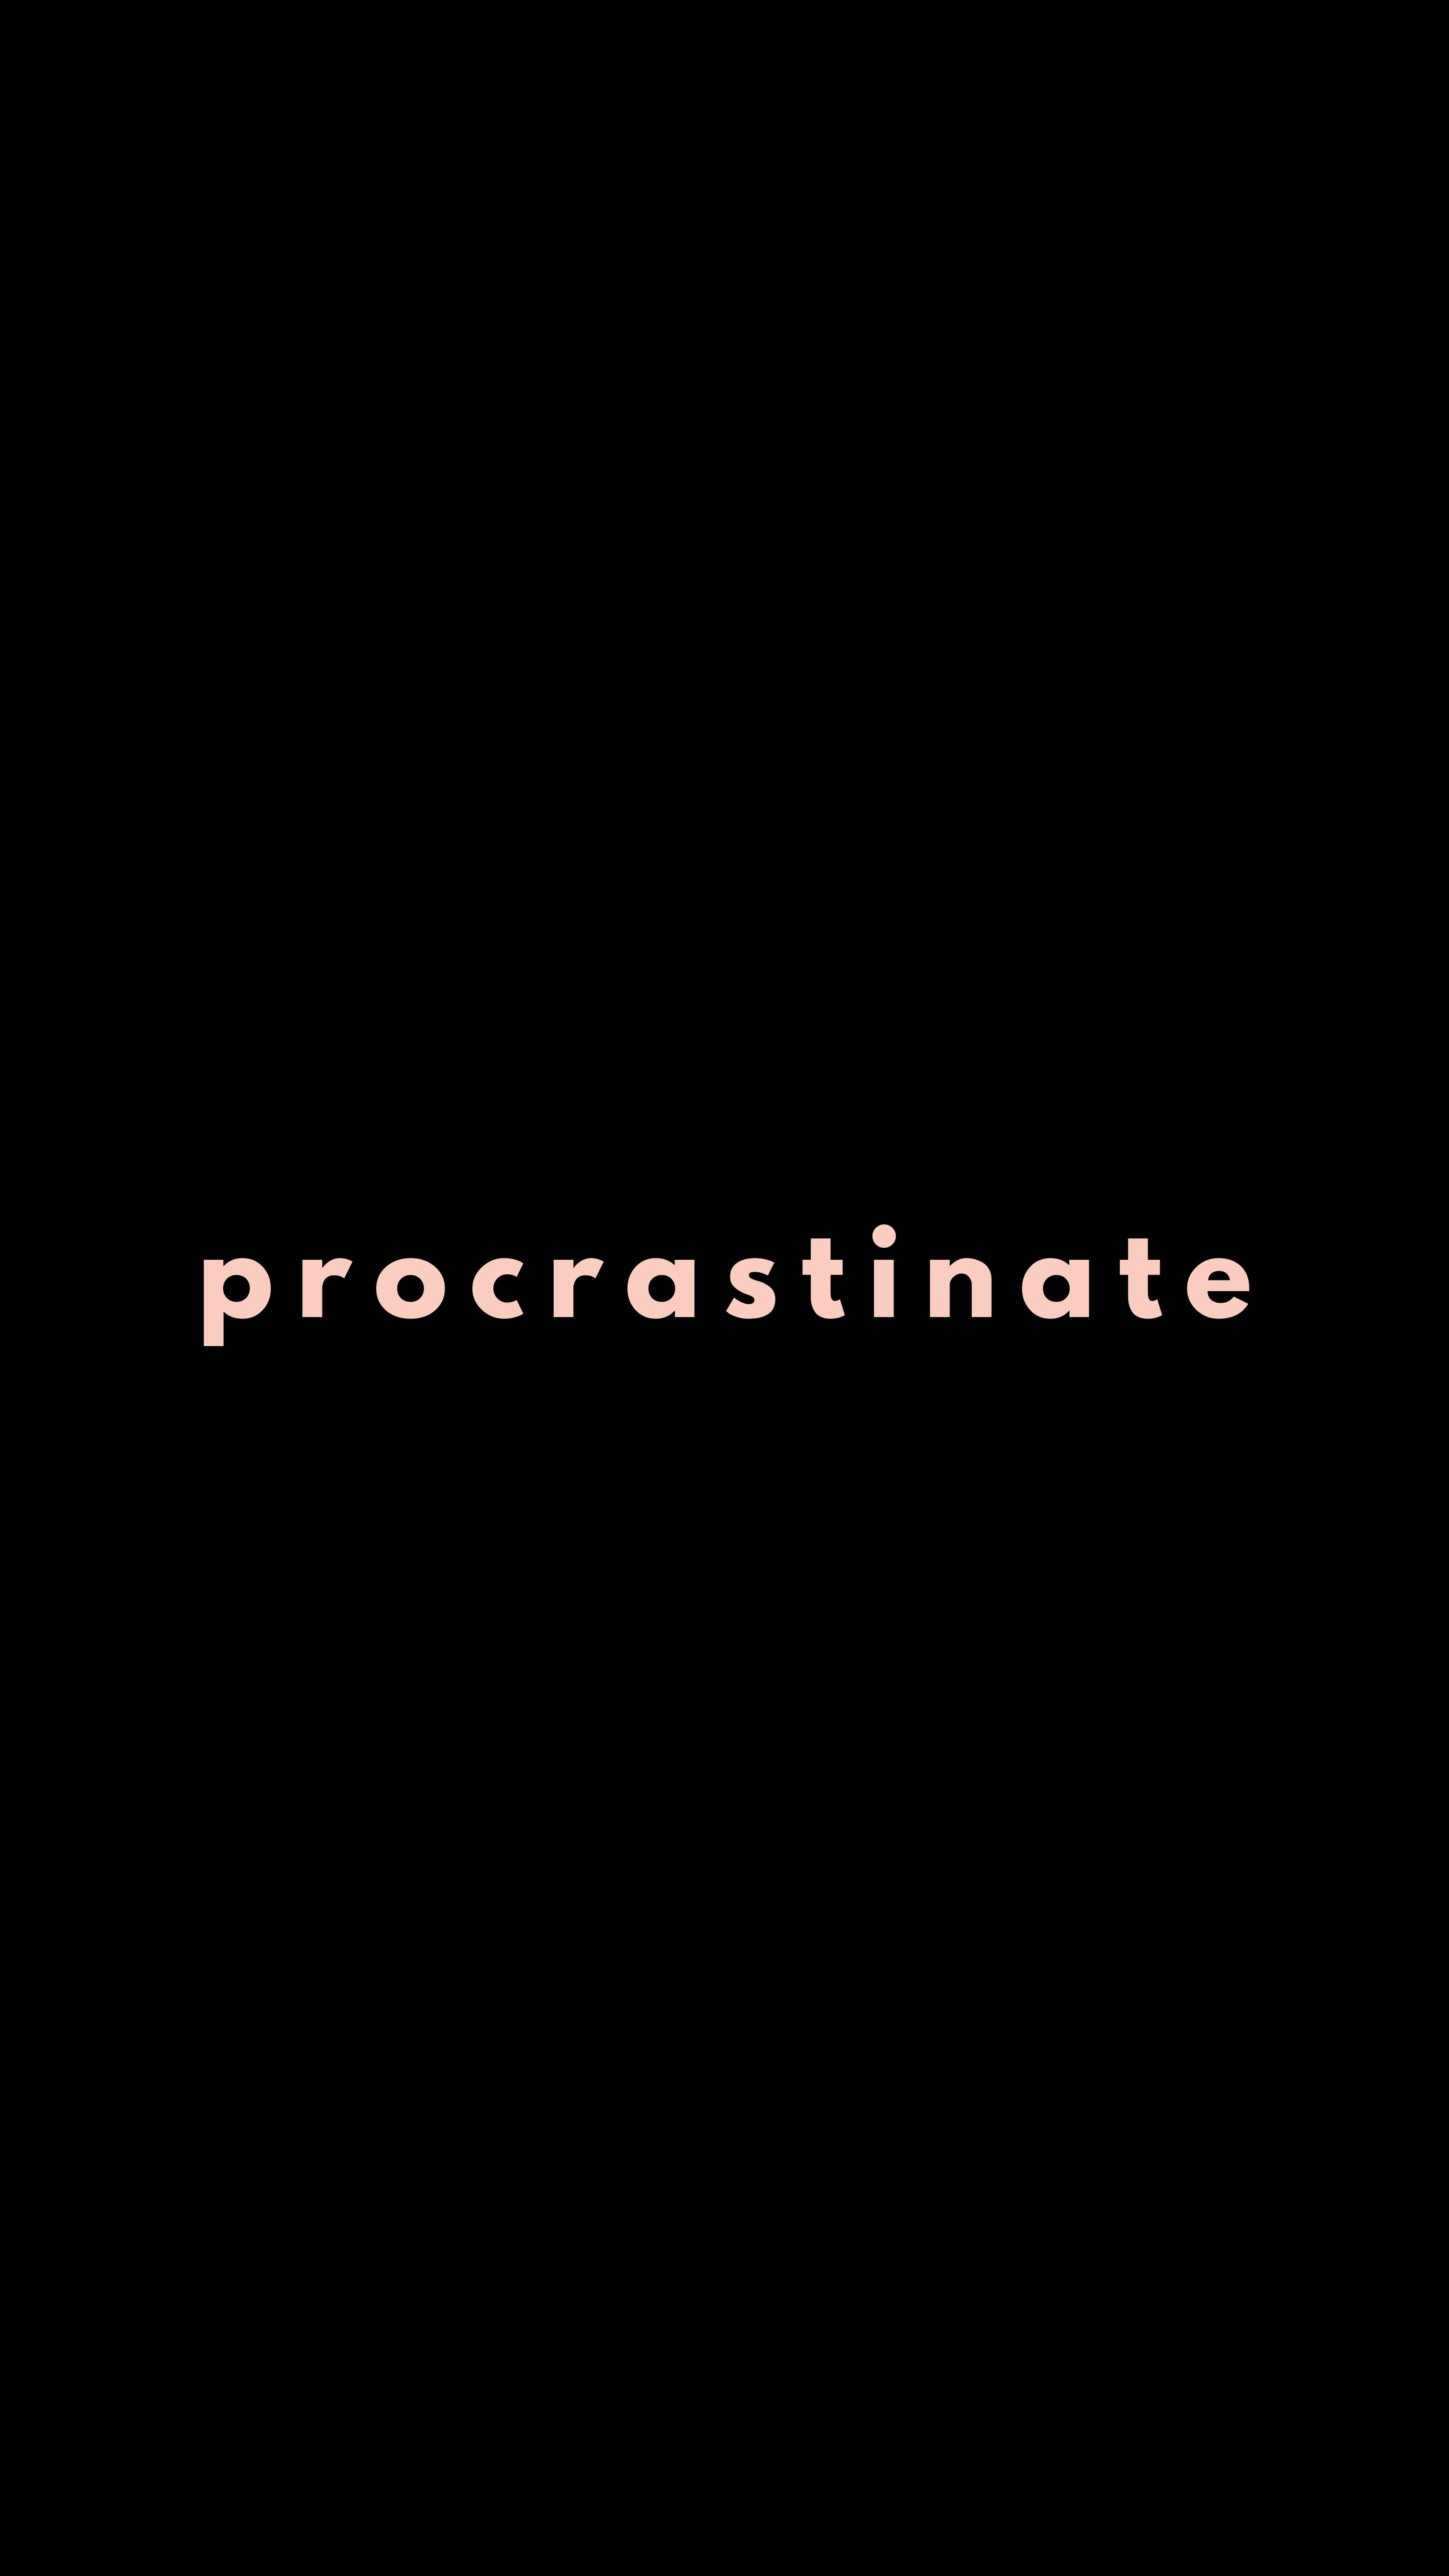 Time it's time, motivation, word, procrastination Free Stock Photos